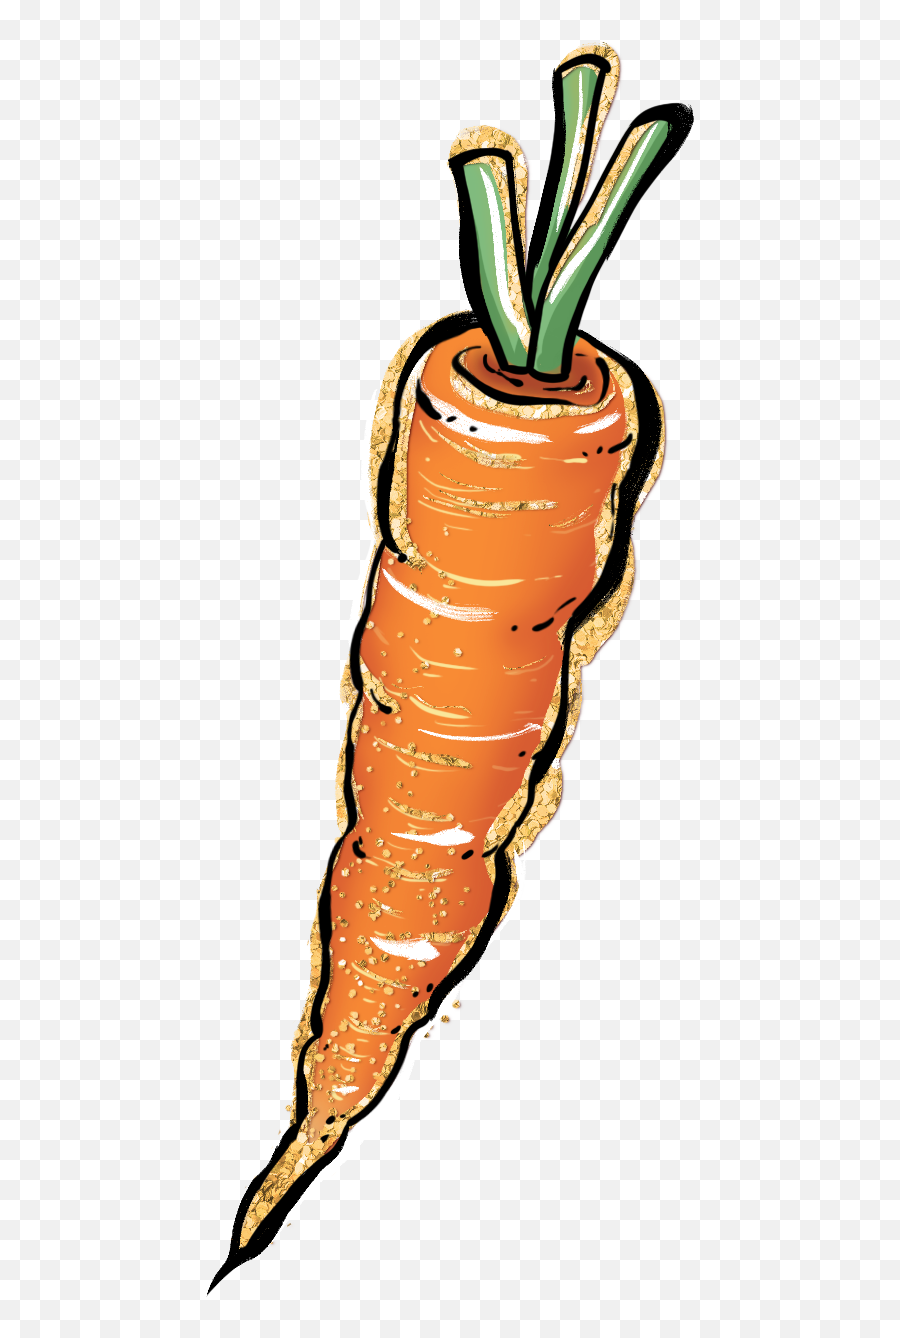 The Most Edited - Baby Carrot Emoji,2 Carots Emoticon